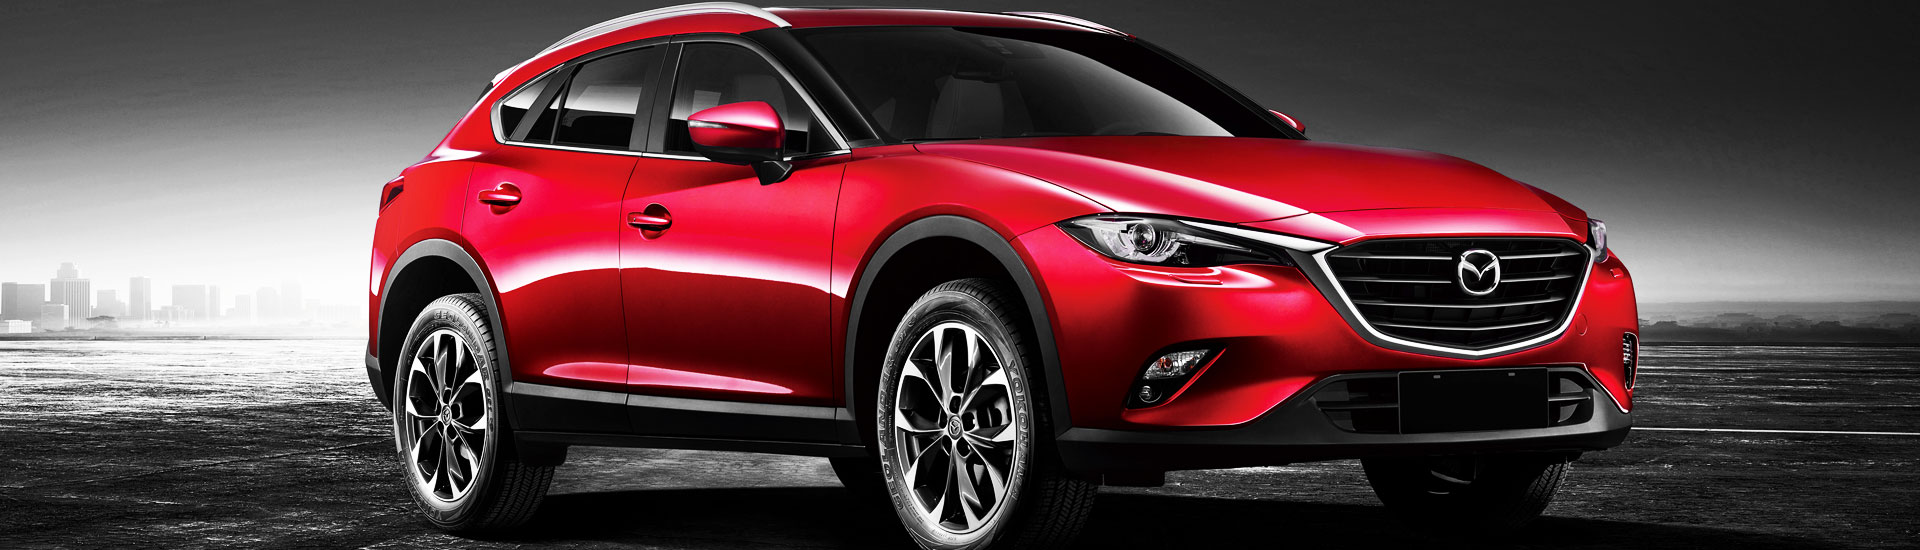 Mazda Mazda6 Window Tint